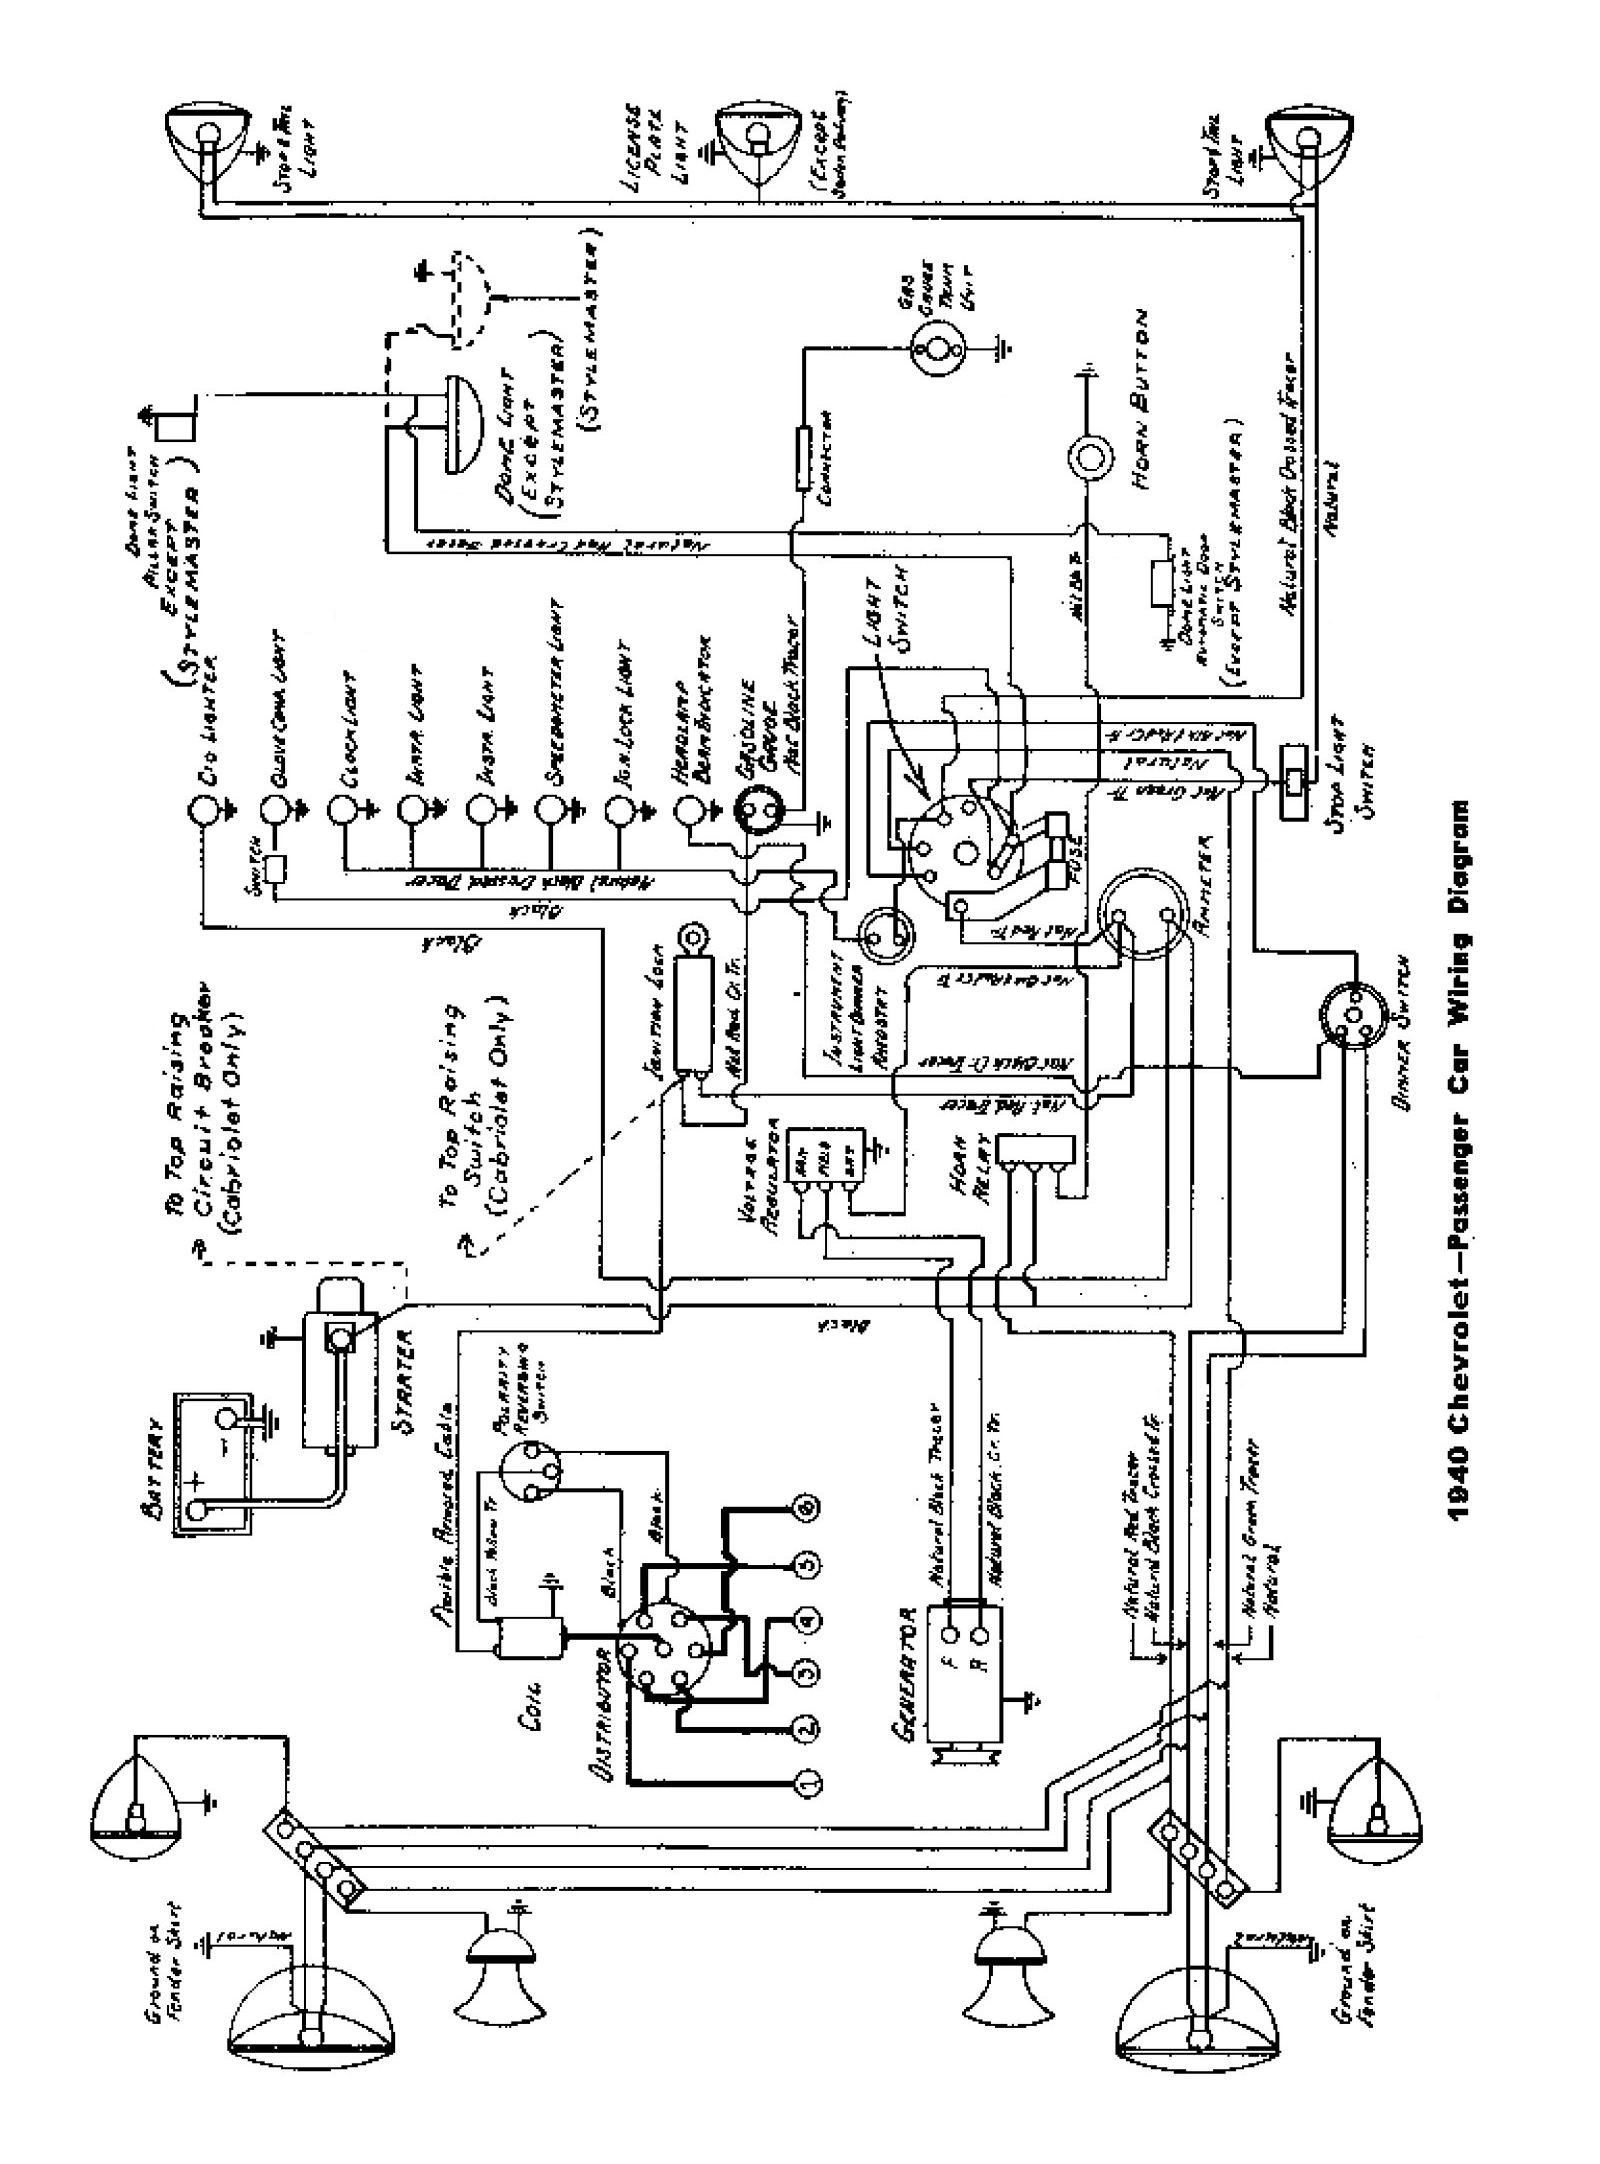 1974 Chevy Truck Wiring Diagram Chevy Wiring Diagrams Of 1974 Chevy Truck Wiring Diagram